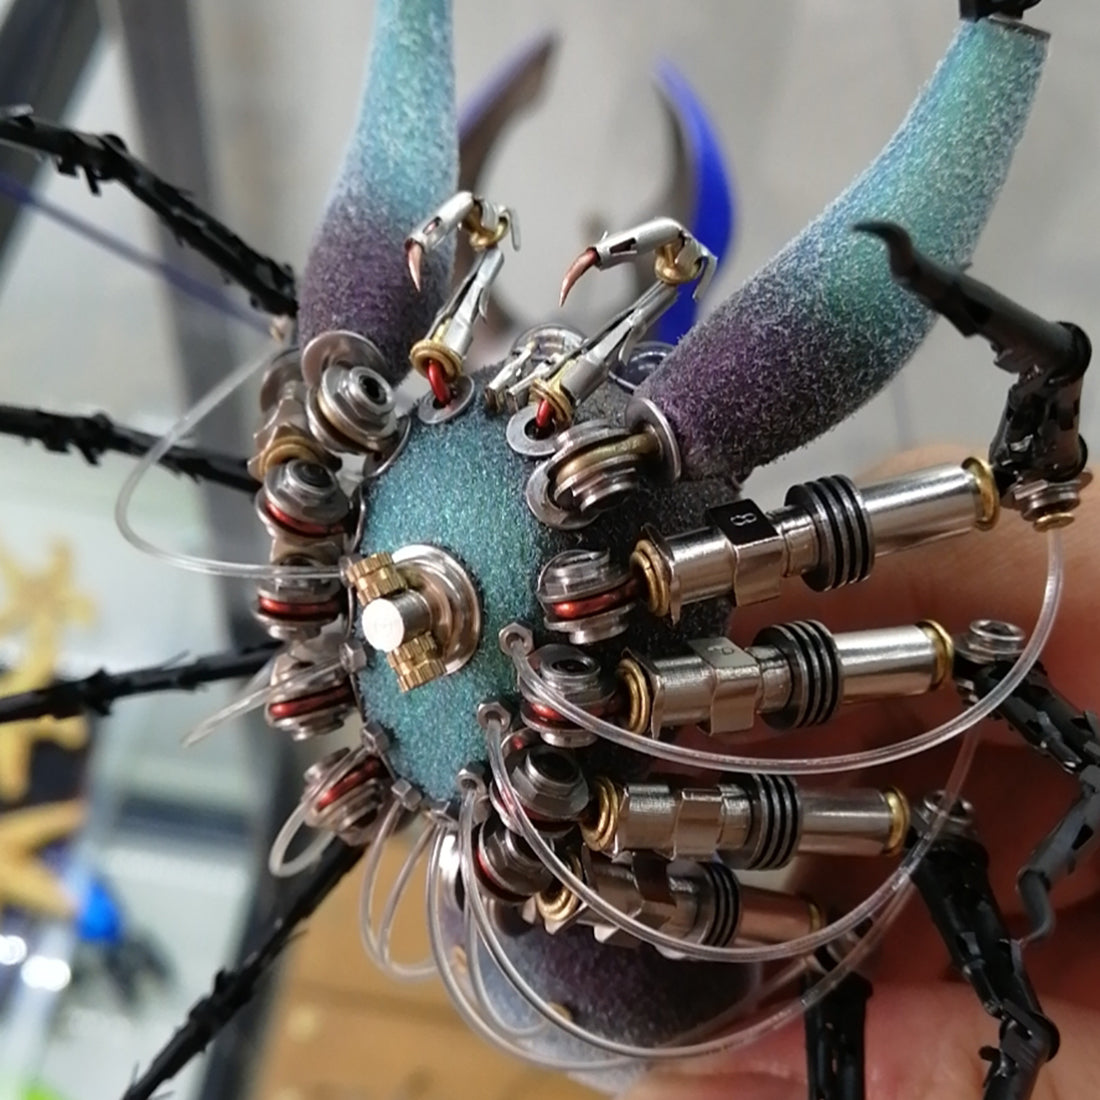 Metal Haplopelma Lividum Spider 3D Steampunk Bug Sculpture Model Kits with Light